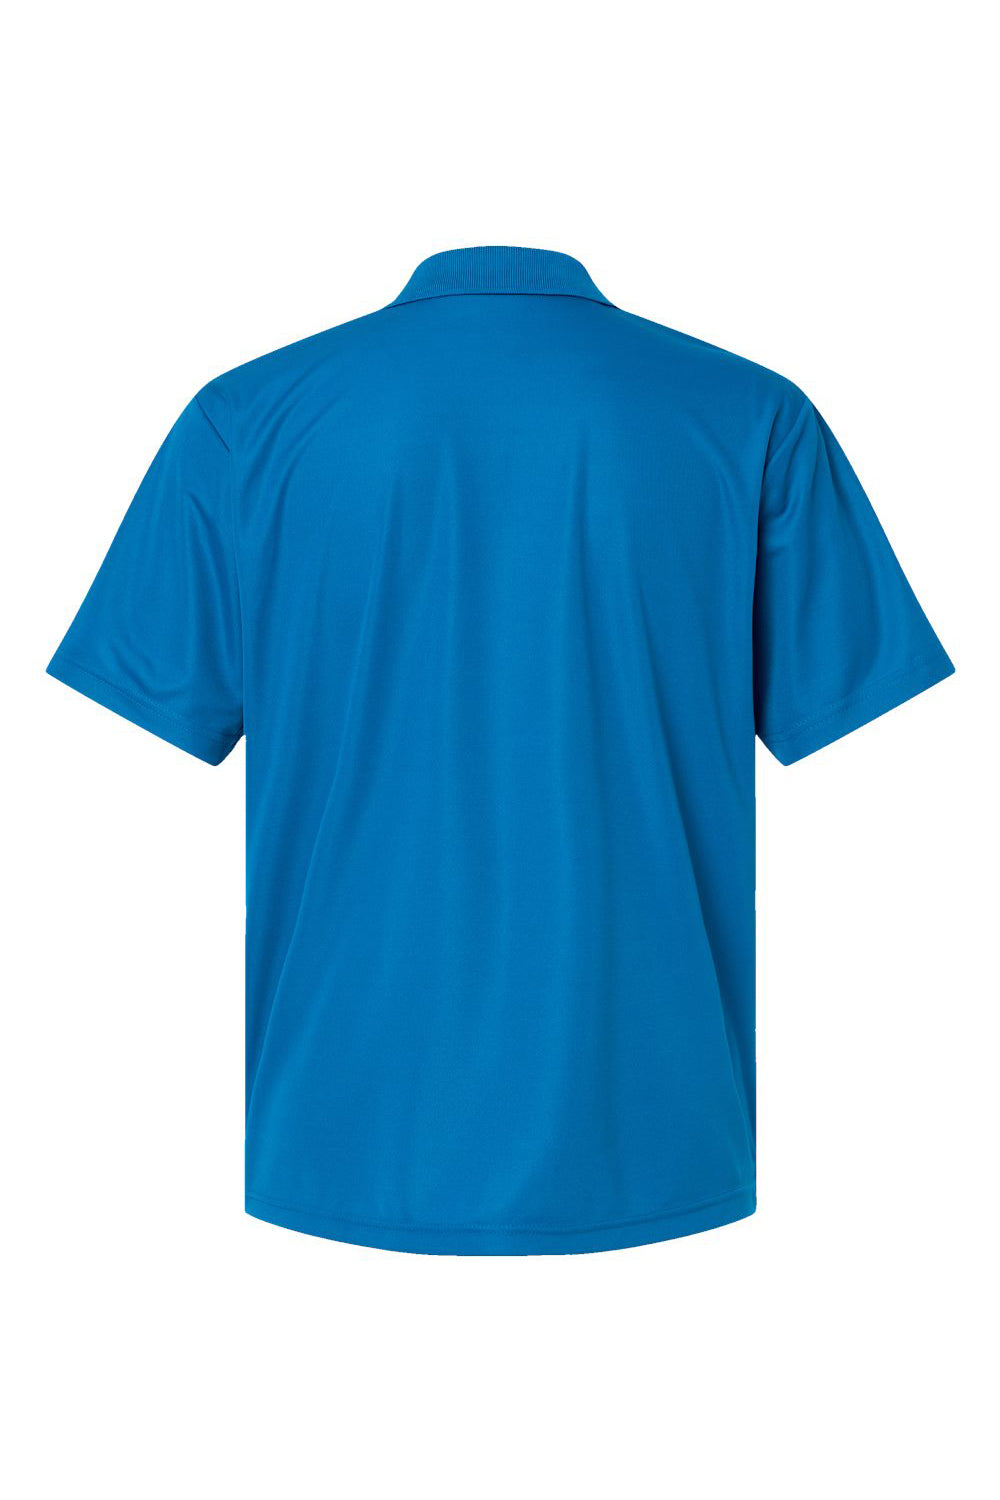 Paragon 500 Mens Sebring Performance Short Sleeve Polo Shirt Turquoise Blue Flat Back